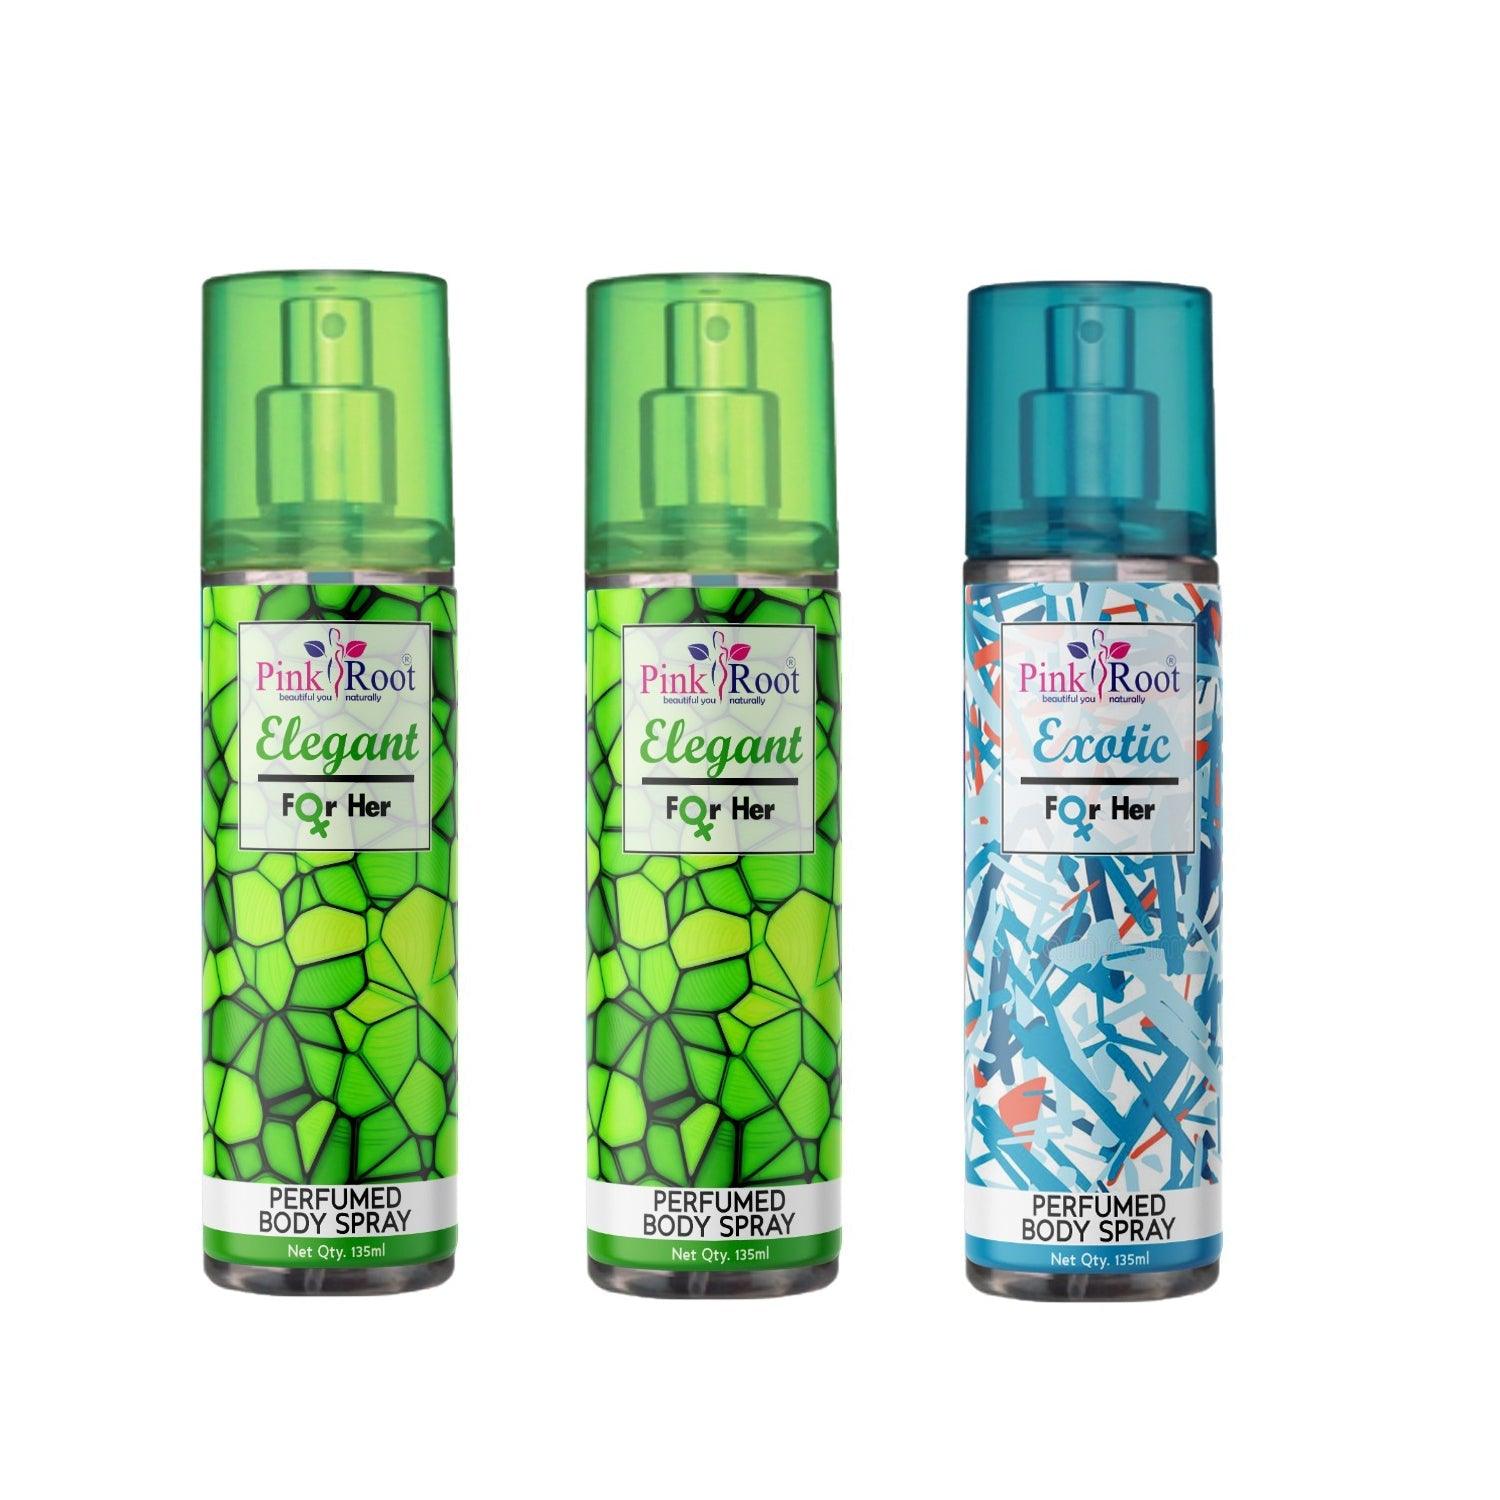 Elegant & Exotic Perfumed Body Spray for Women, Pack of 3 - Pink Root